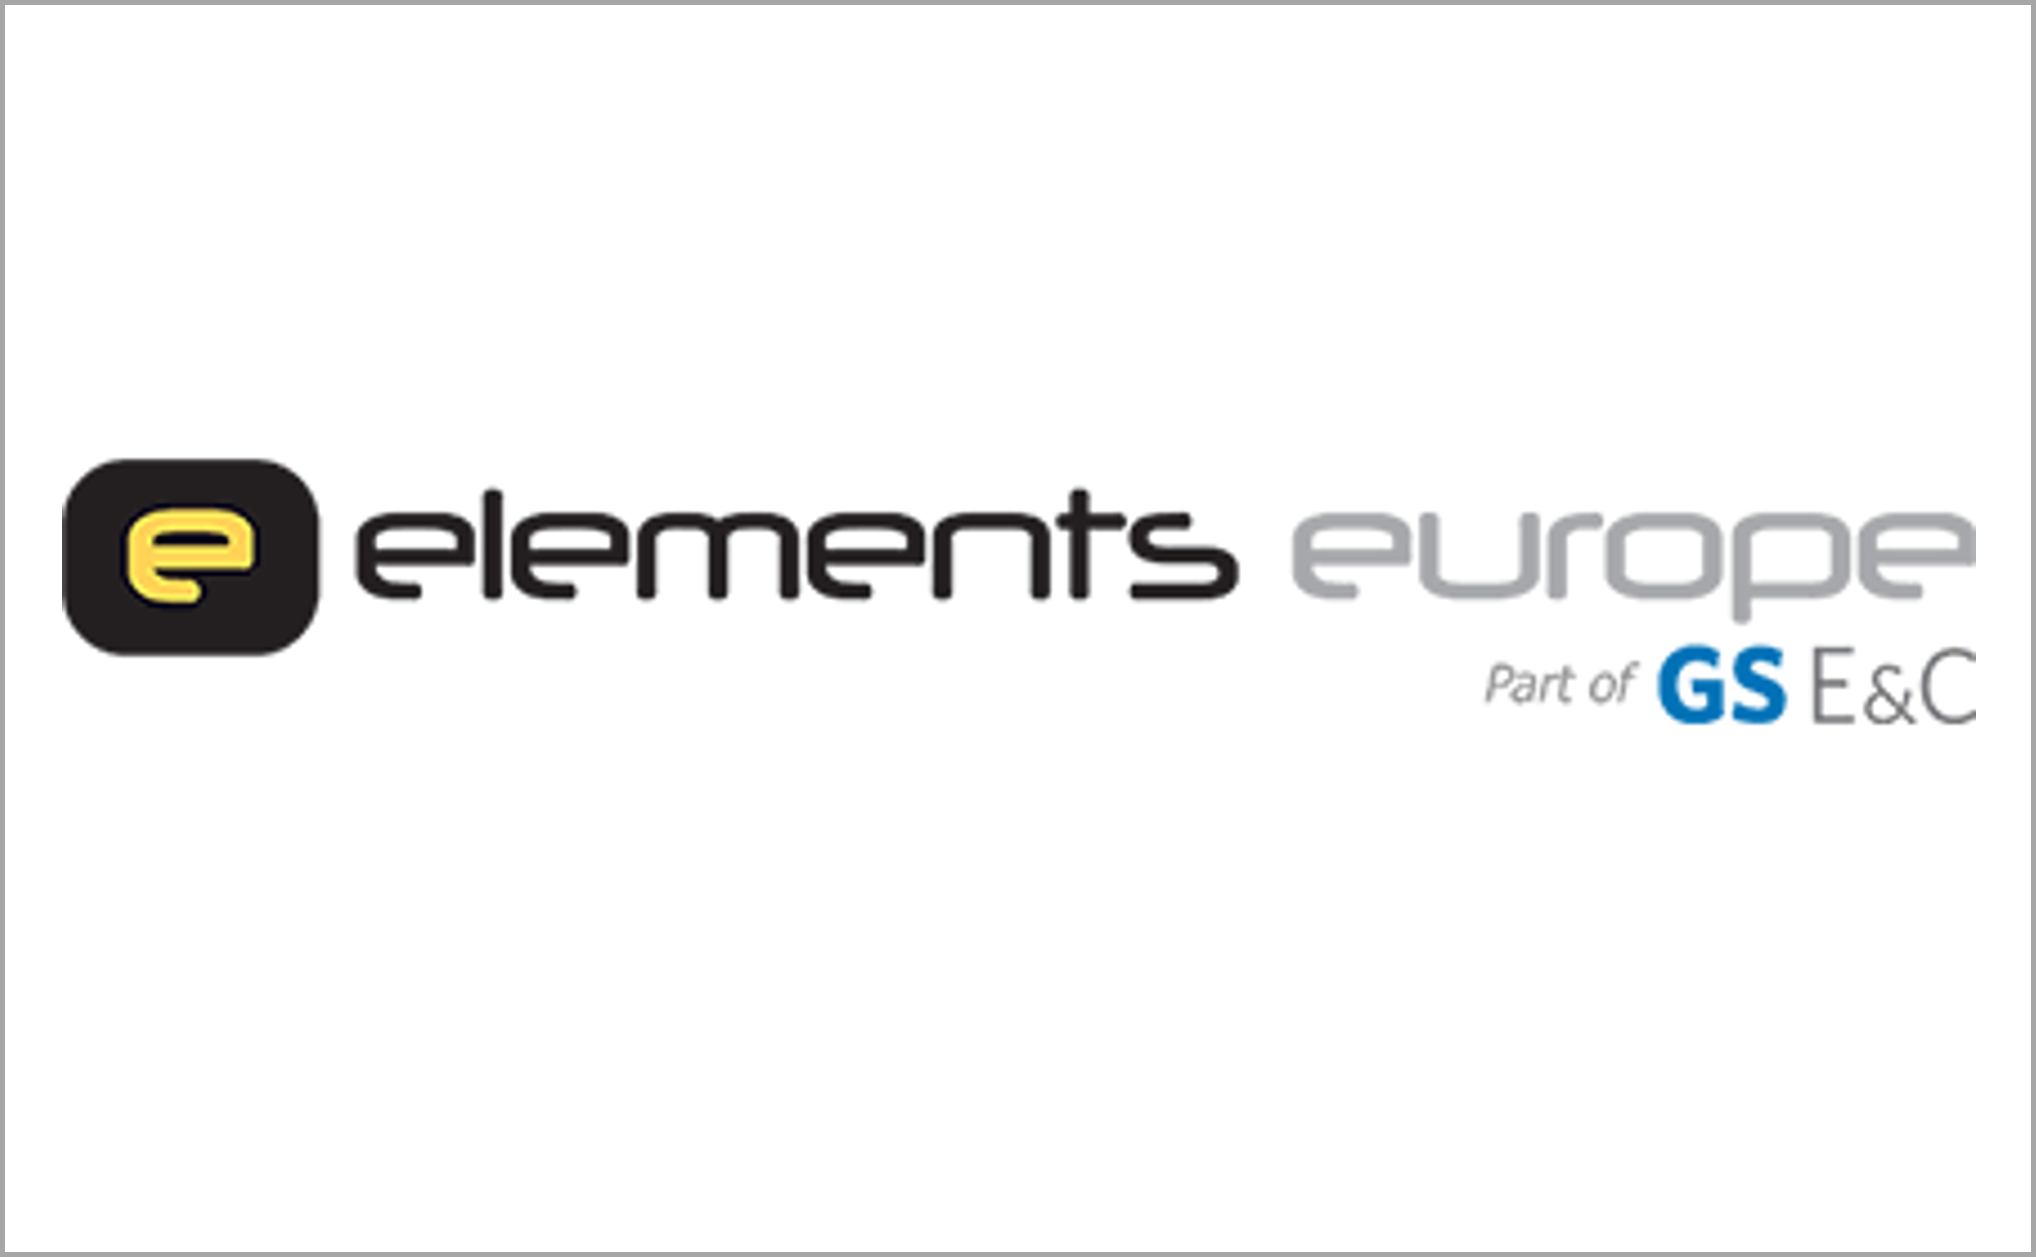 Elements Europe